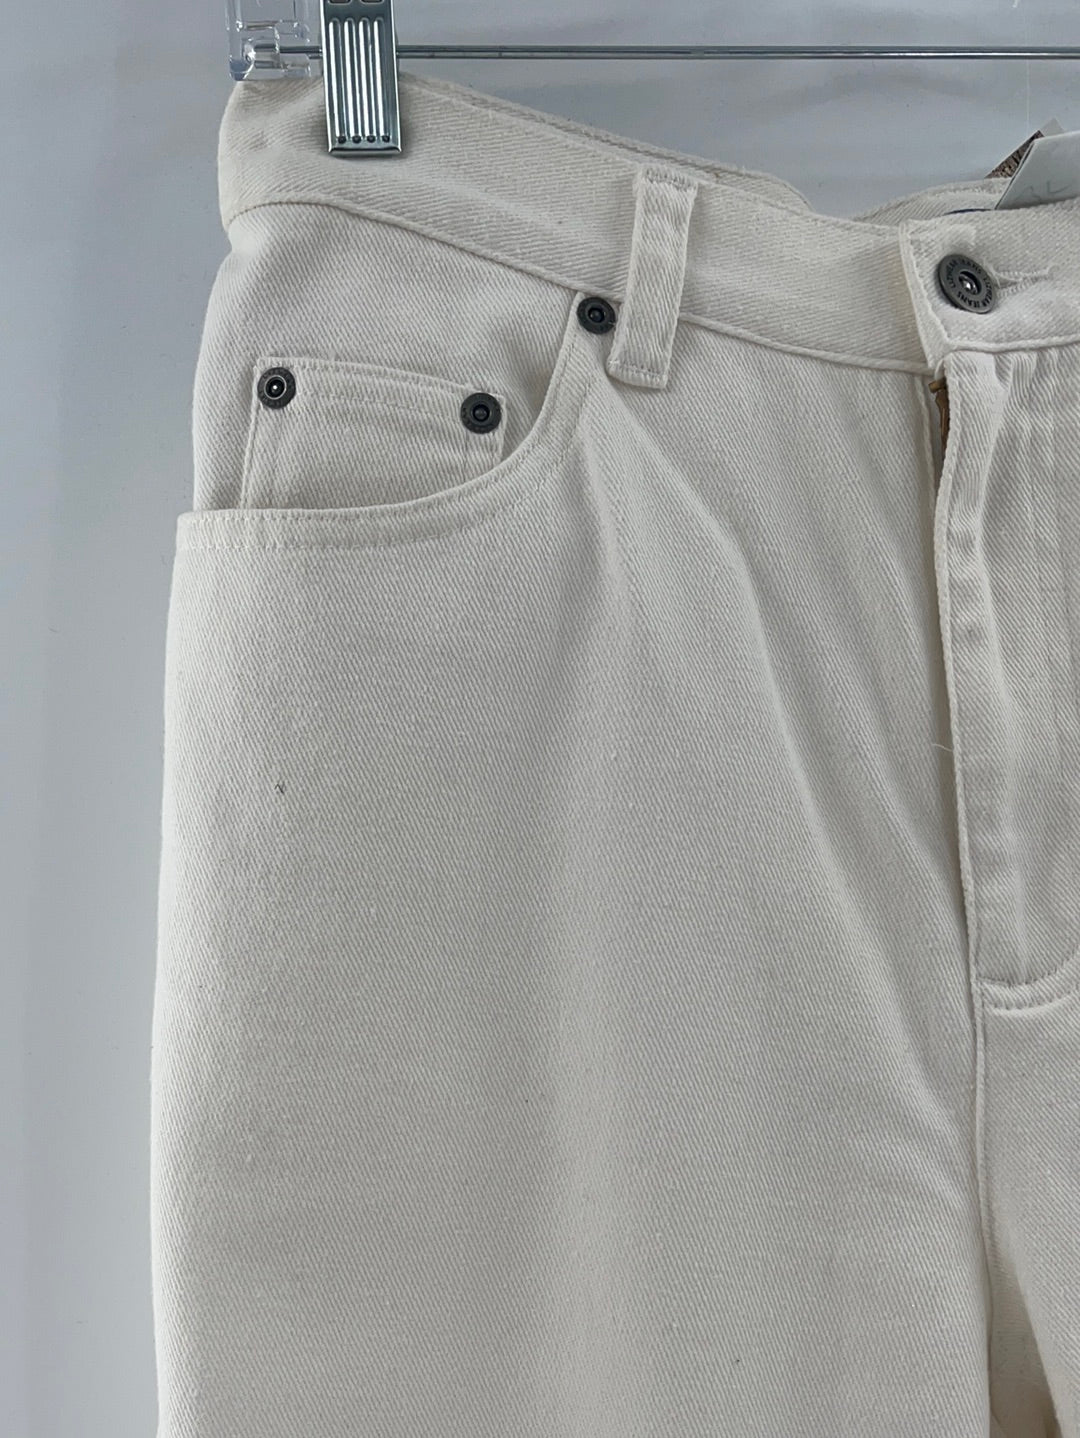 White Liz Claiborne Jeans DEADSTOCK (Size 10 regular)